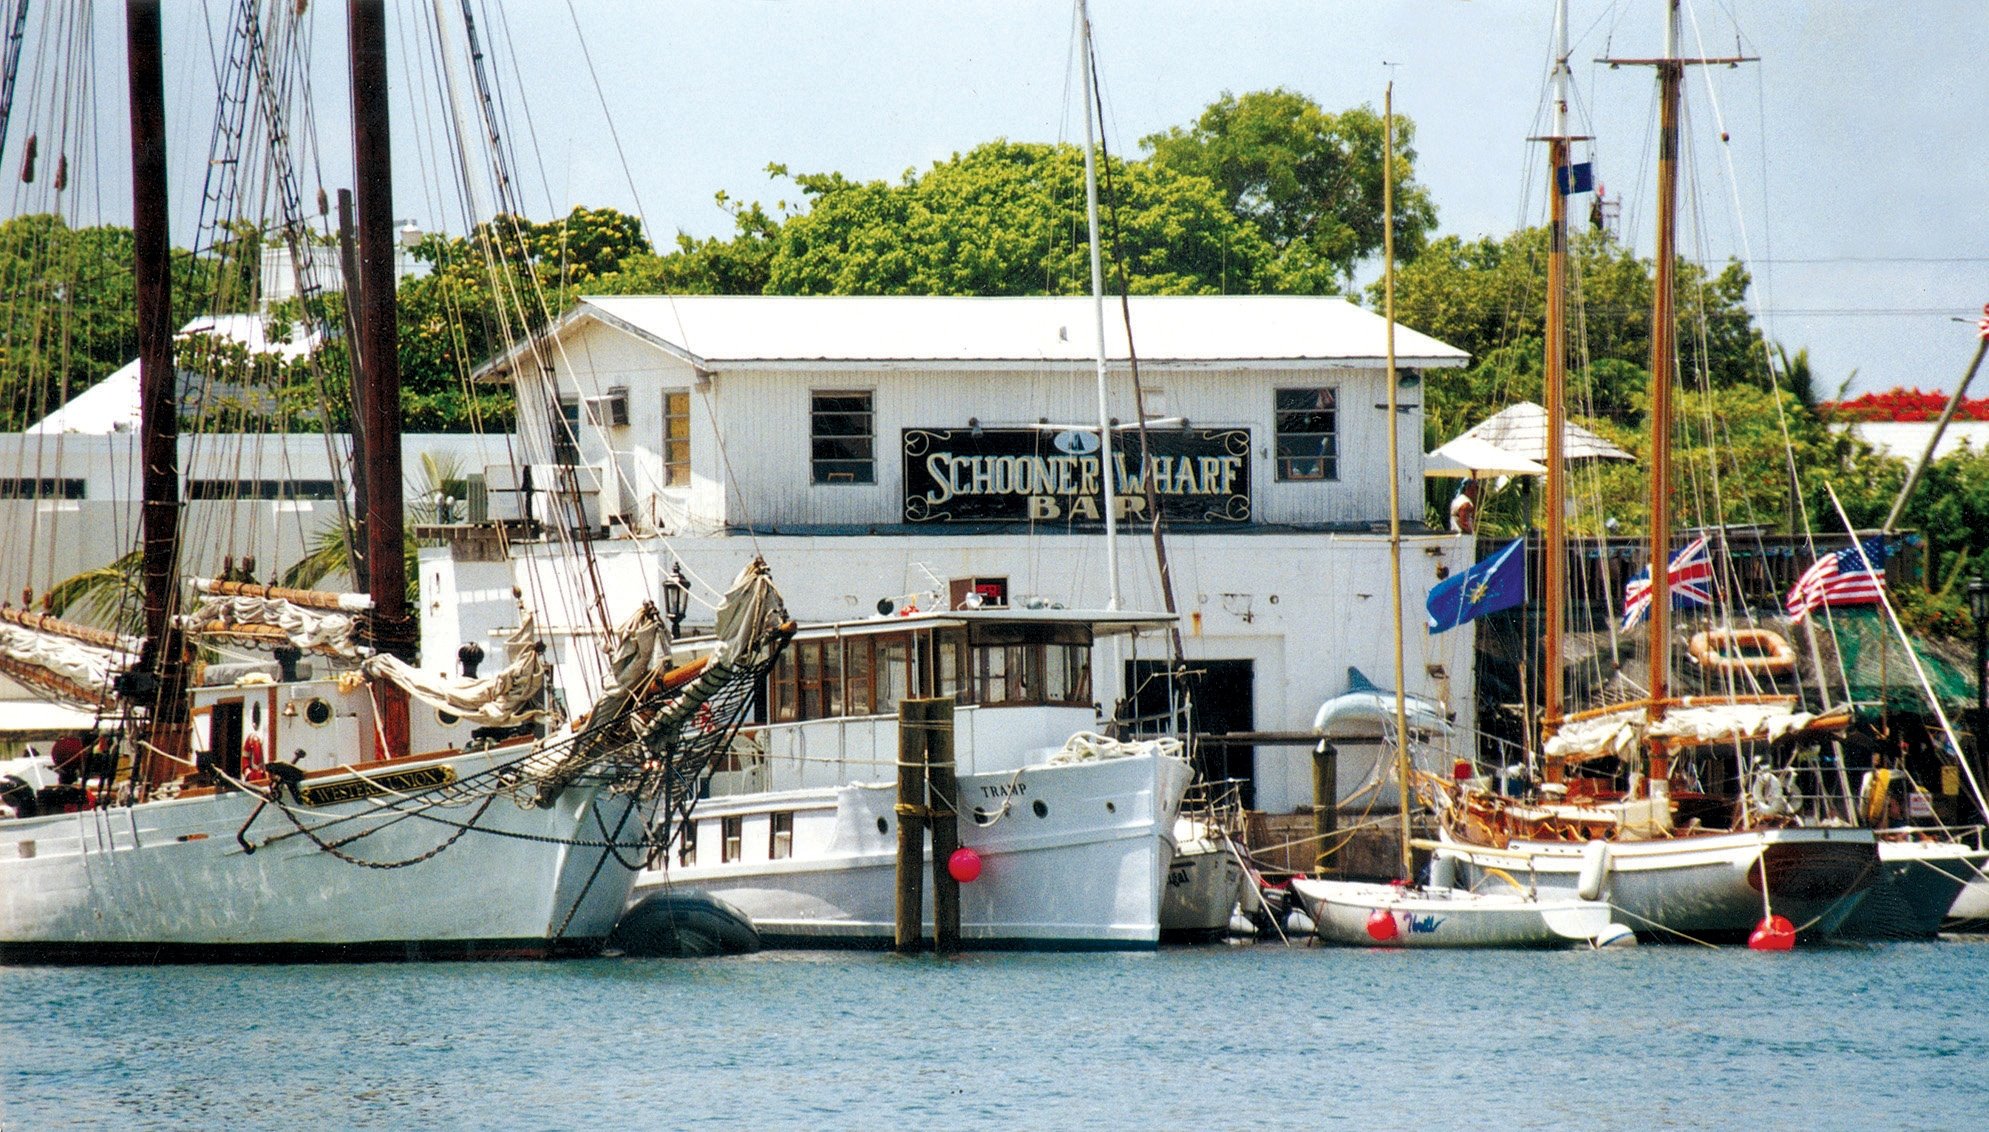 Key West Schooner Wharf Bar